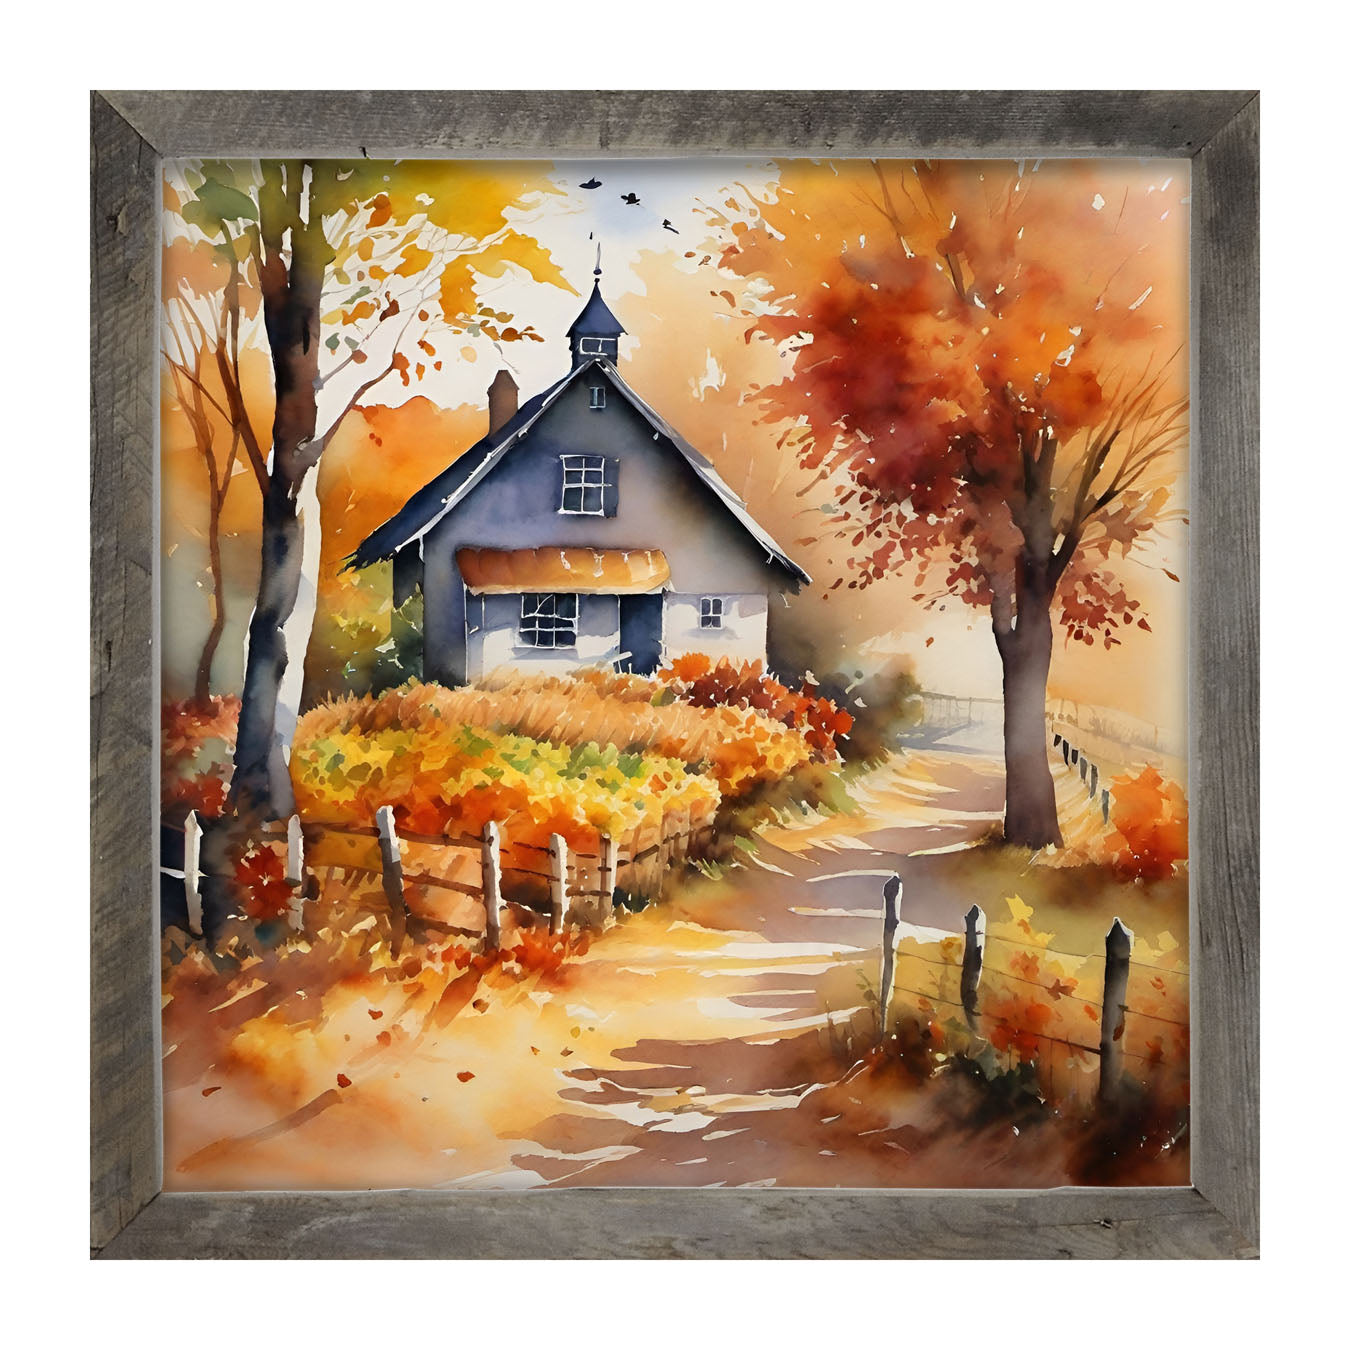 Autumn house on path